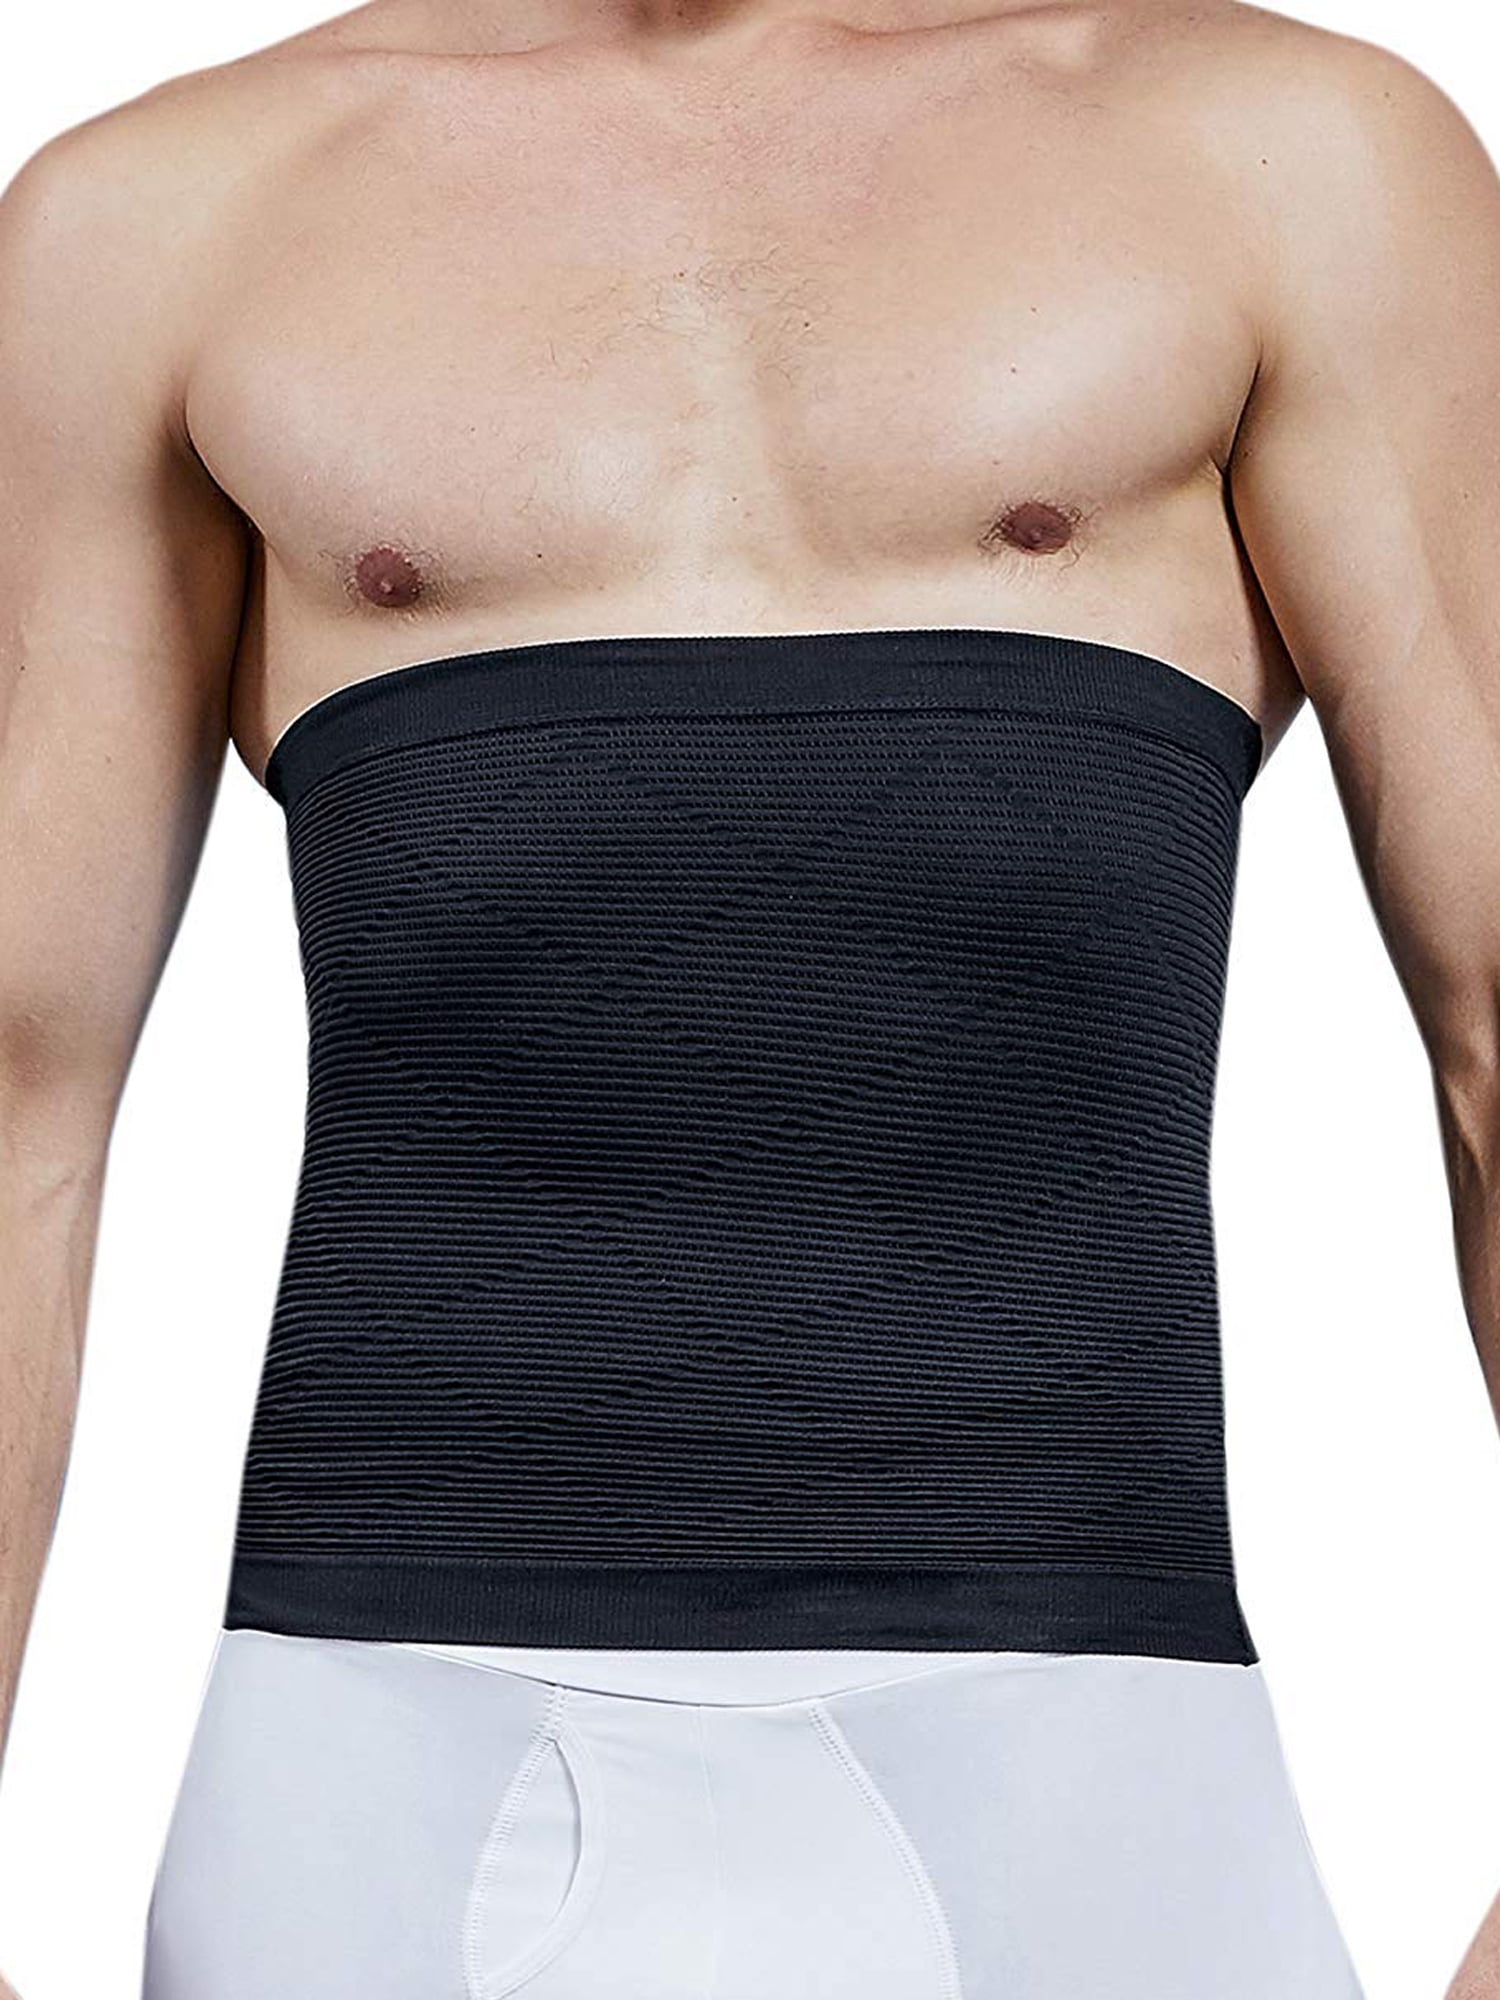 Men Shapewear Full Body Shaper Compression Slimming Tummy Control